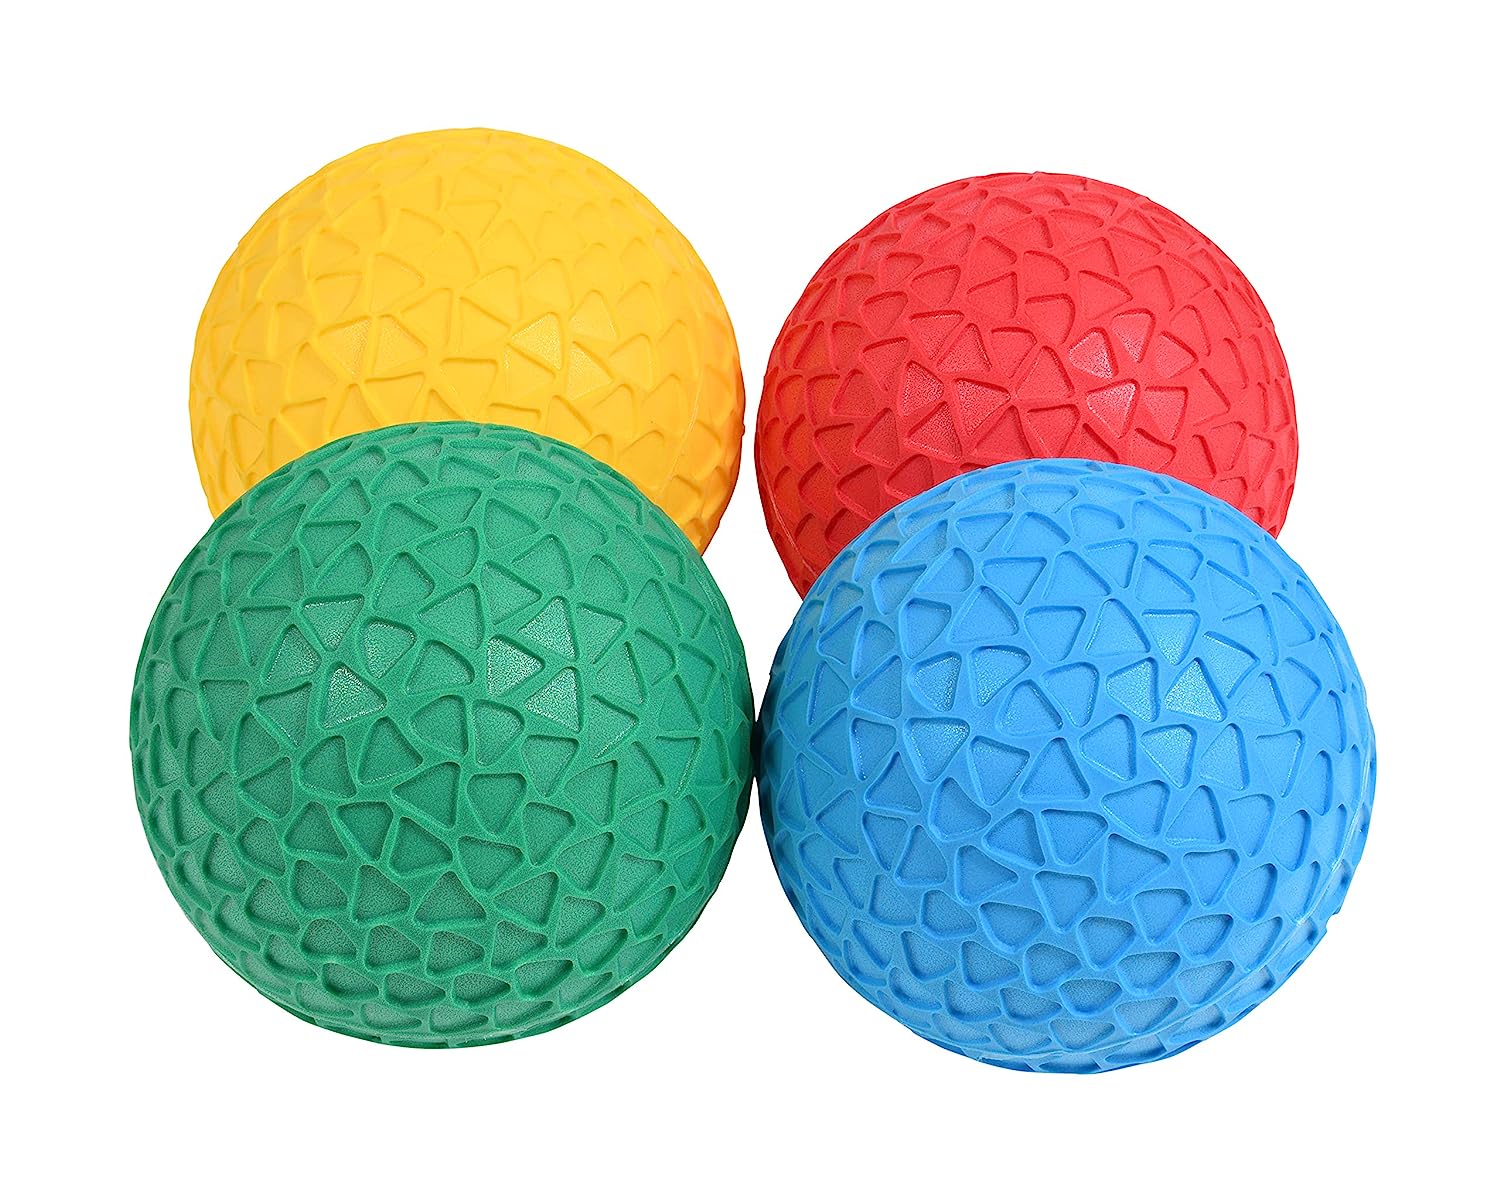 Ballons ergonomiques easy grip